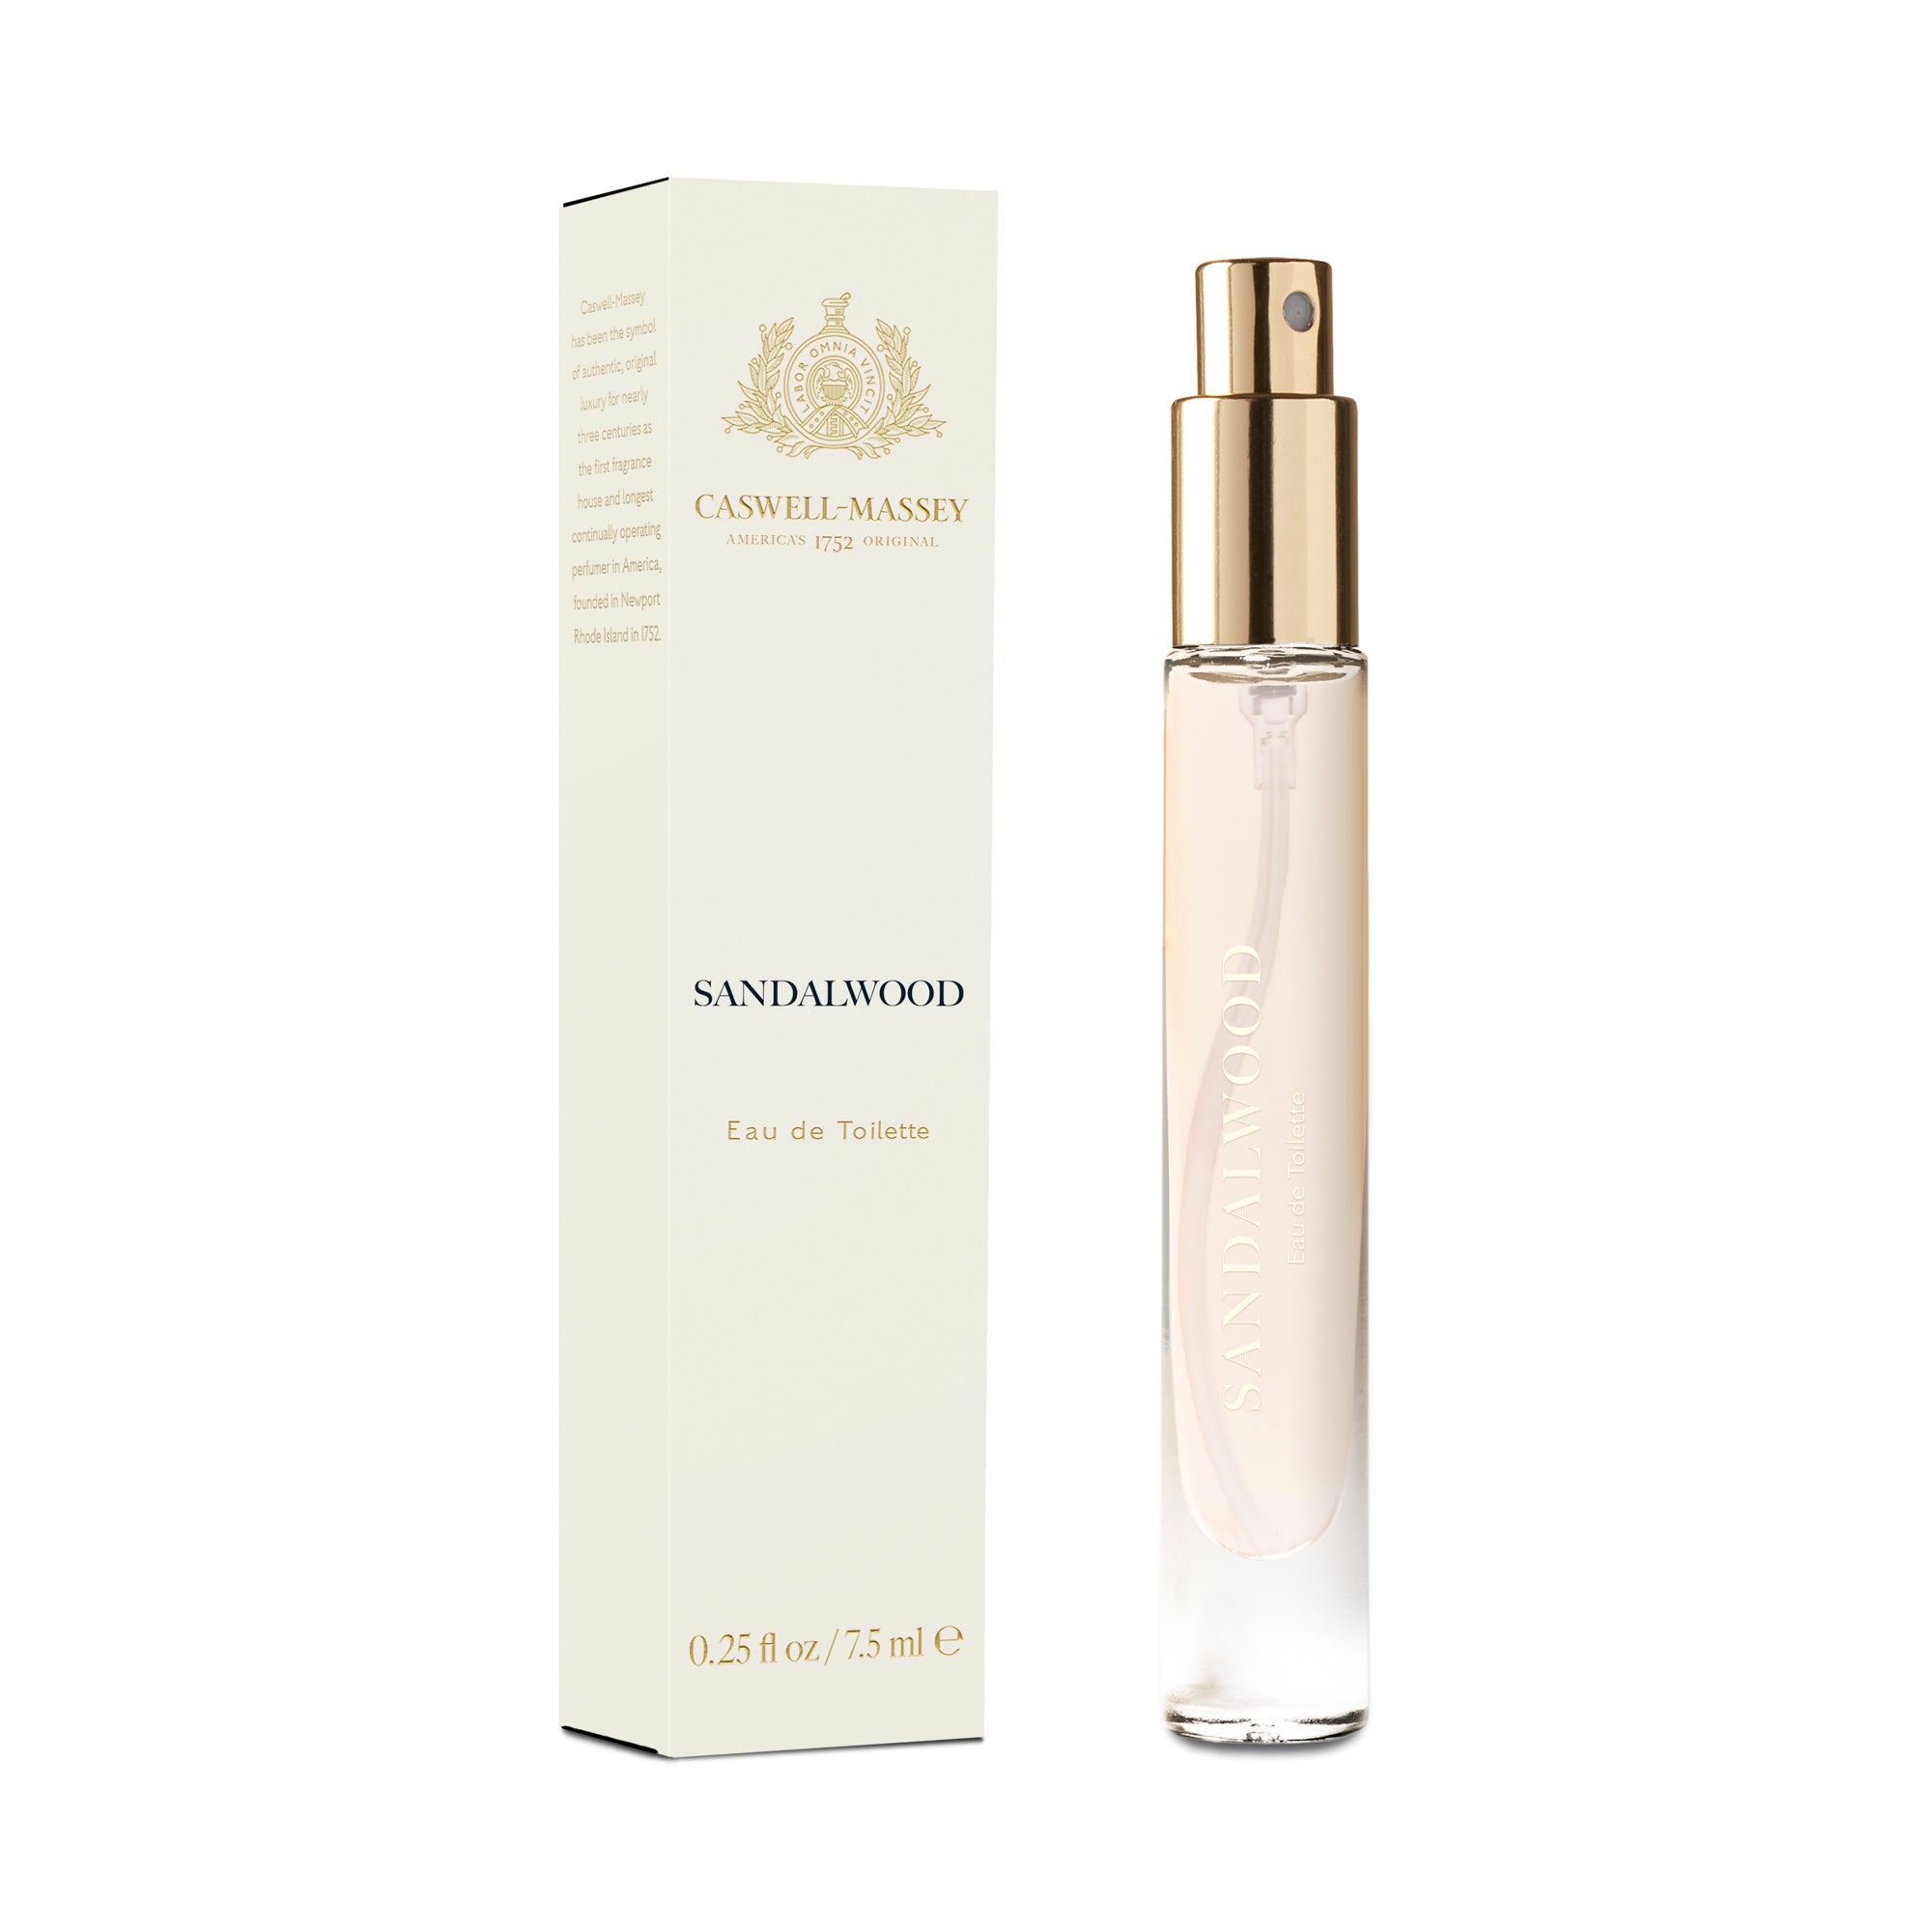 Perfume Gift Set - Amber Musk Sandalwood Perfume + Travel Spray